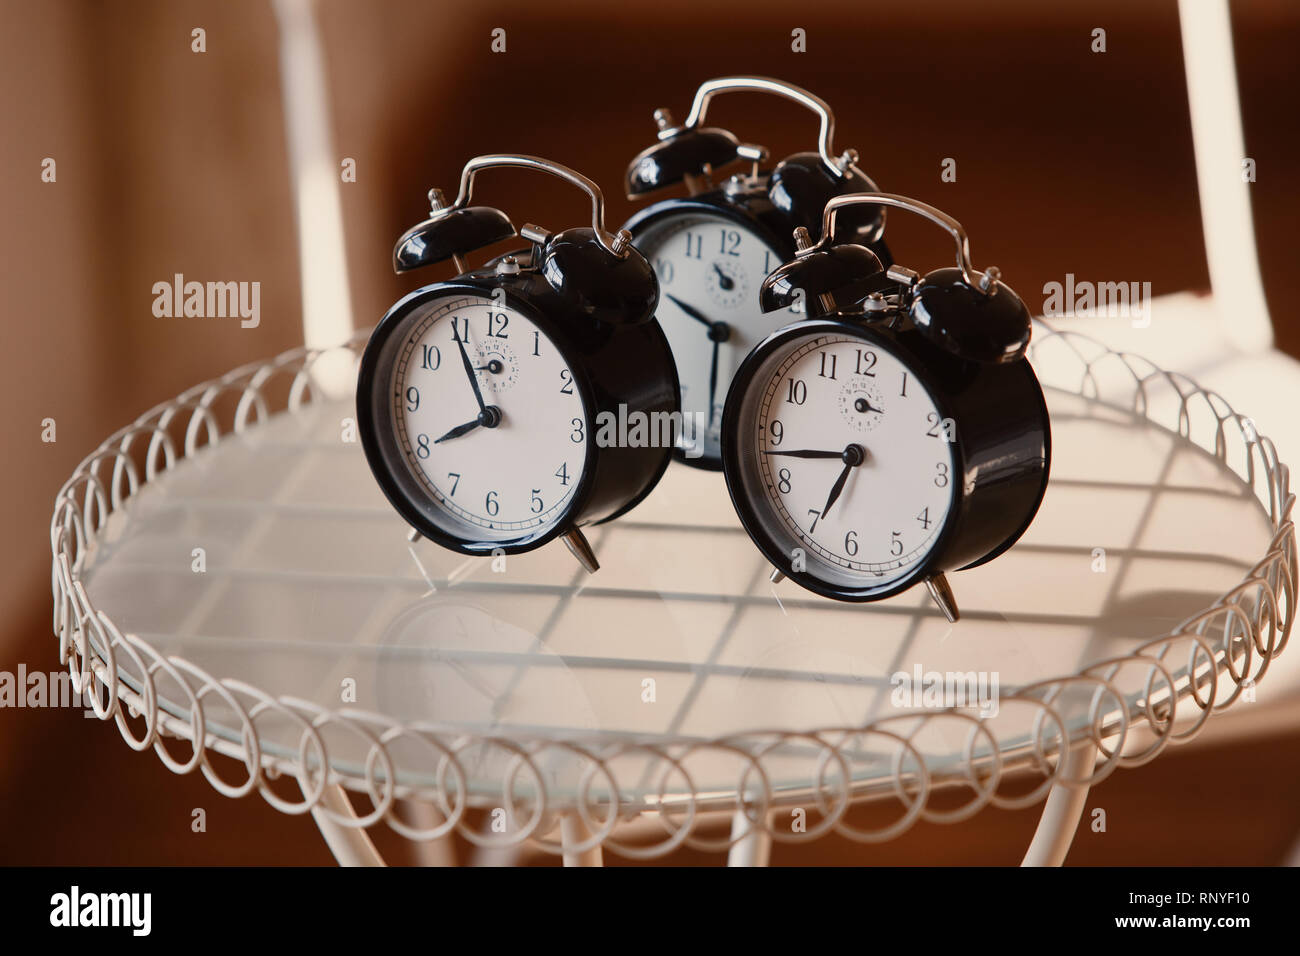 Three alarm clocks on glass table Stock Photo